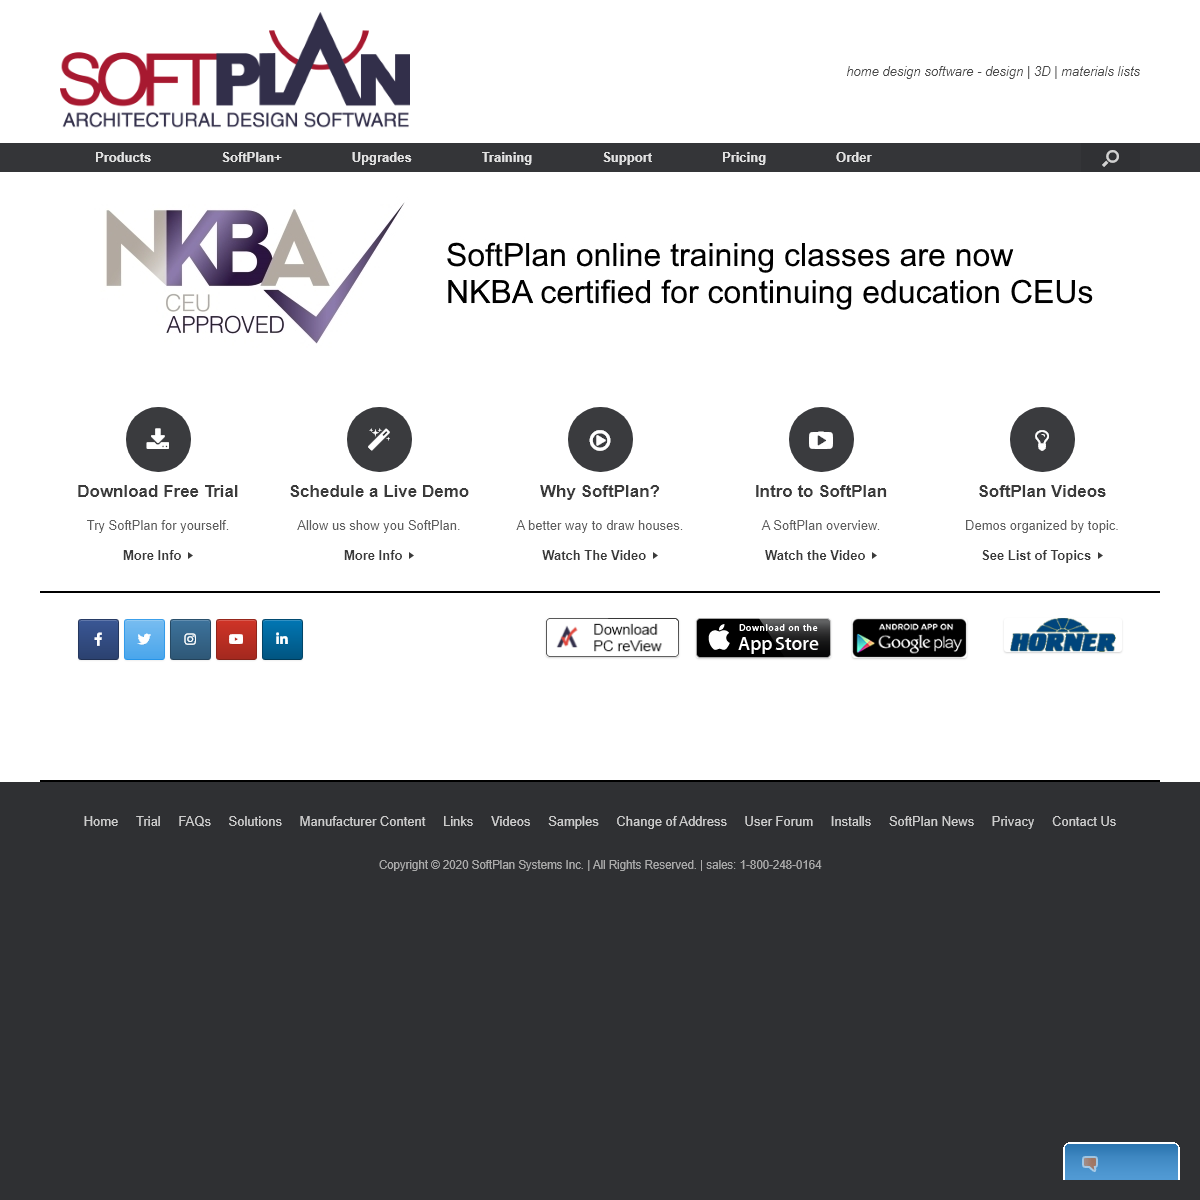 A complete backup of softplan.com